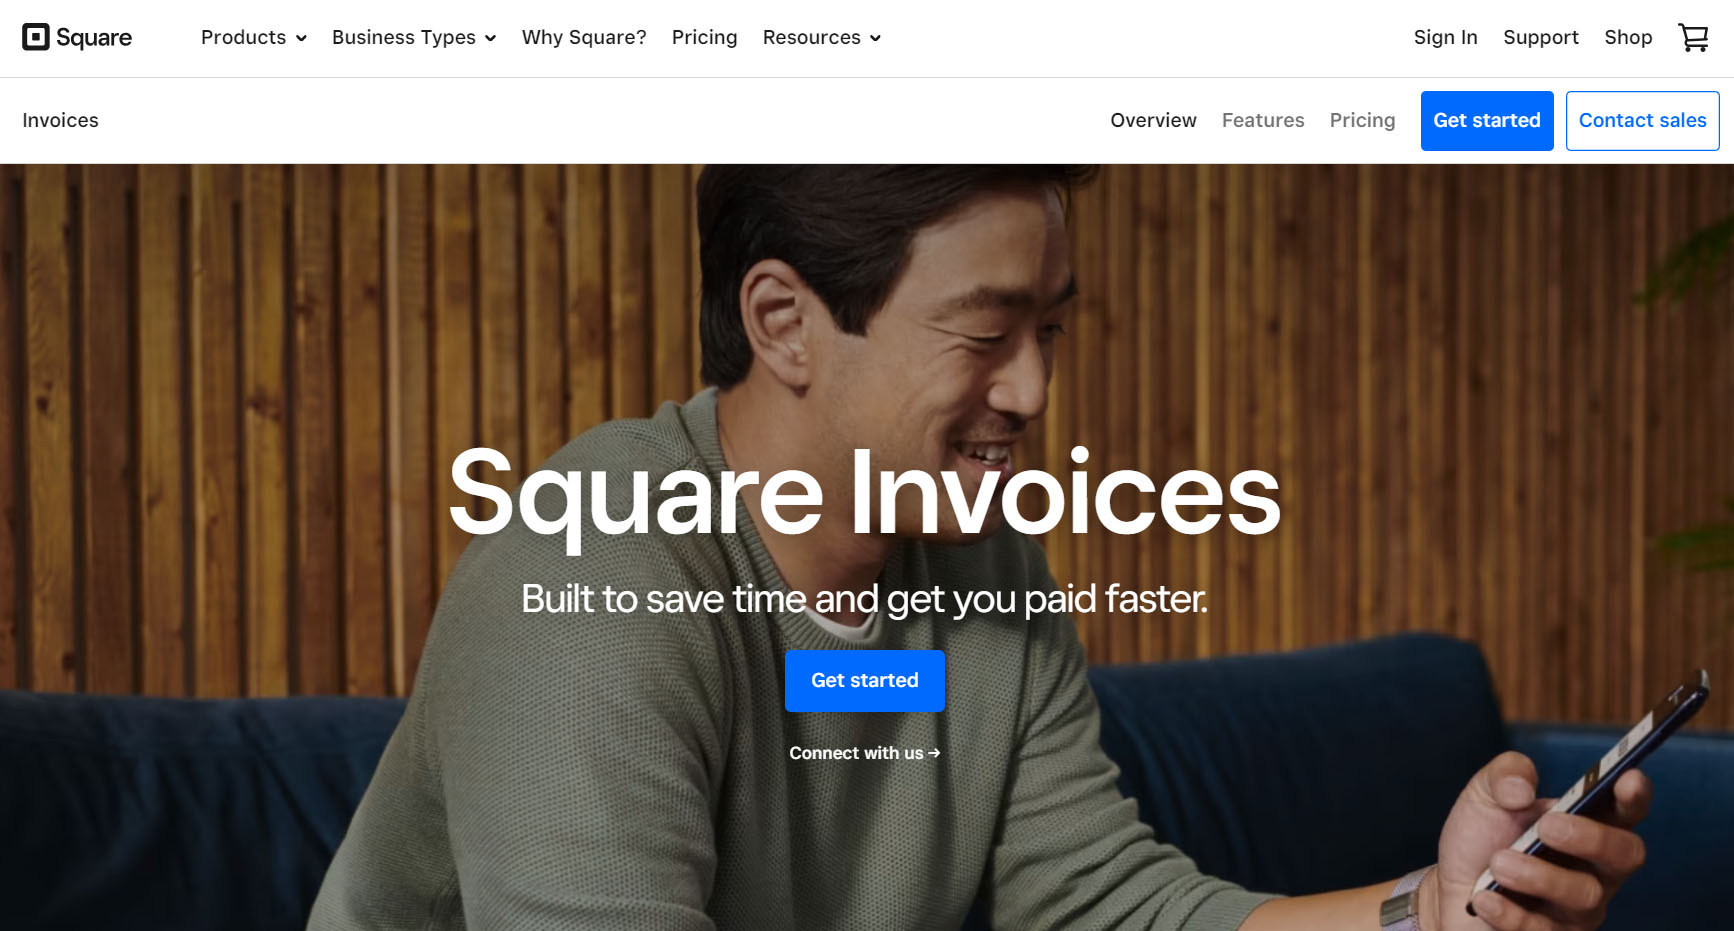 Square Invoices